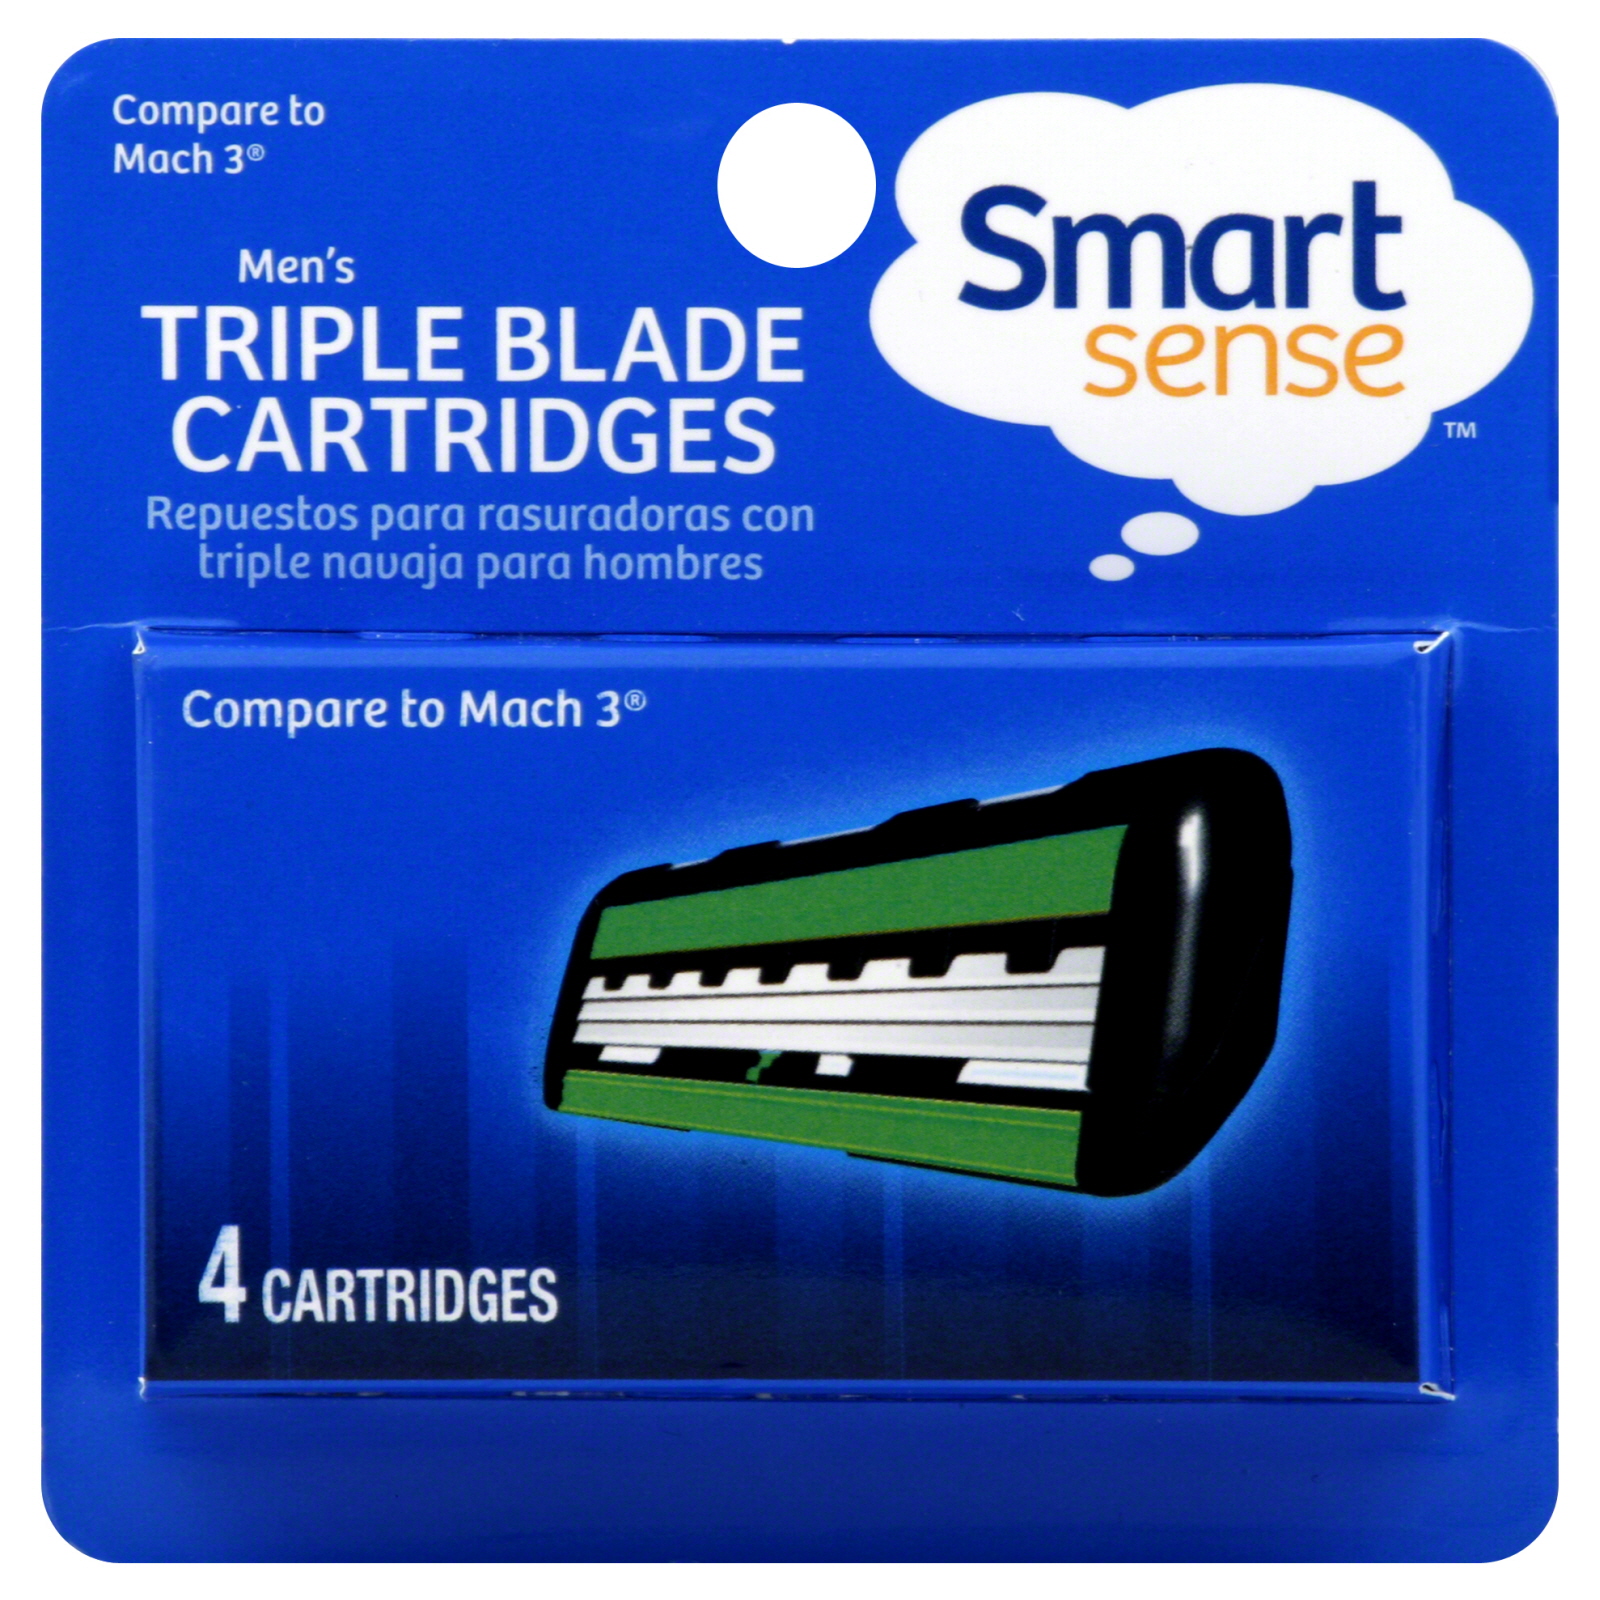 Smart Sense Cartridges, Triple Blade, Men's, 4 cartridges